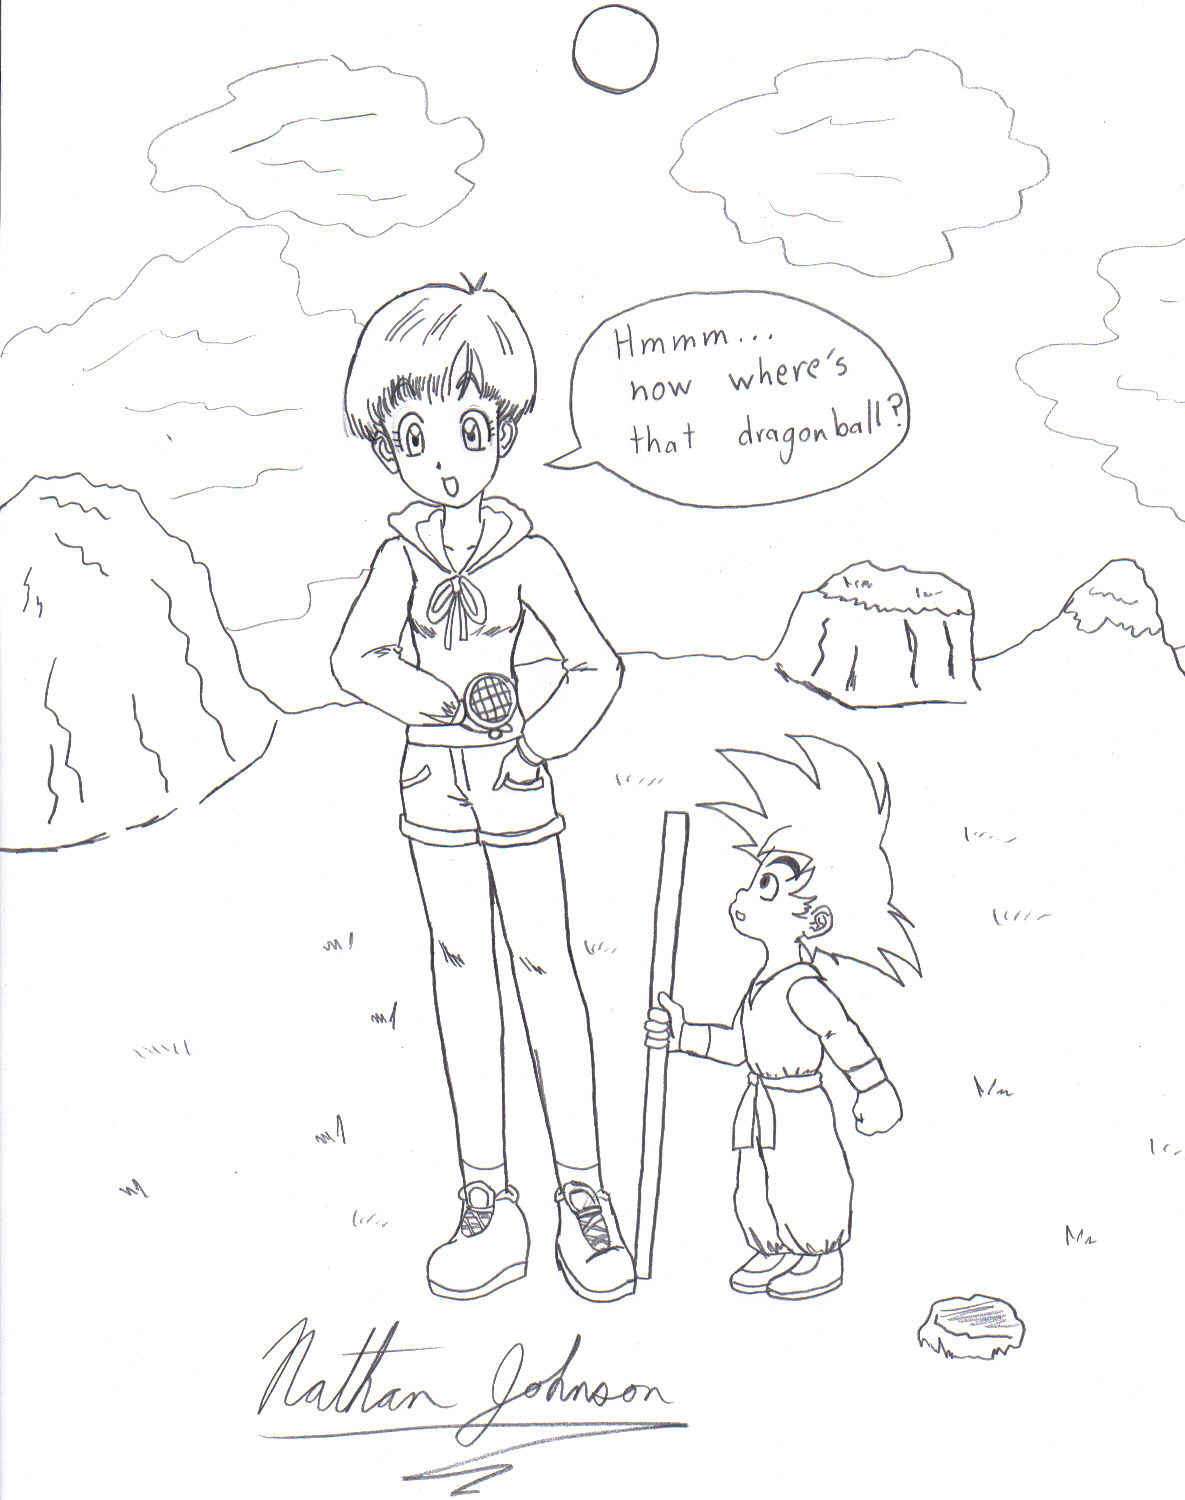 Bulma and Goku: "Where's that dragonball?" by Jet_lunarskye